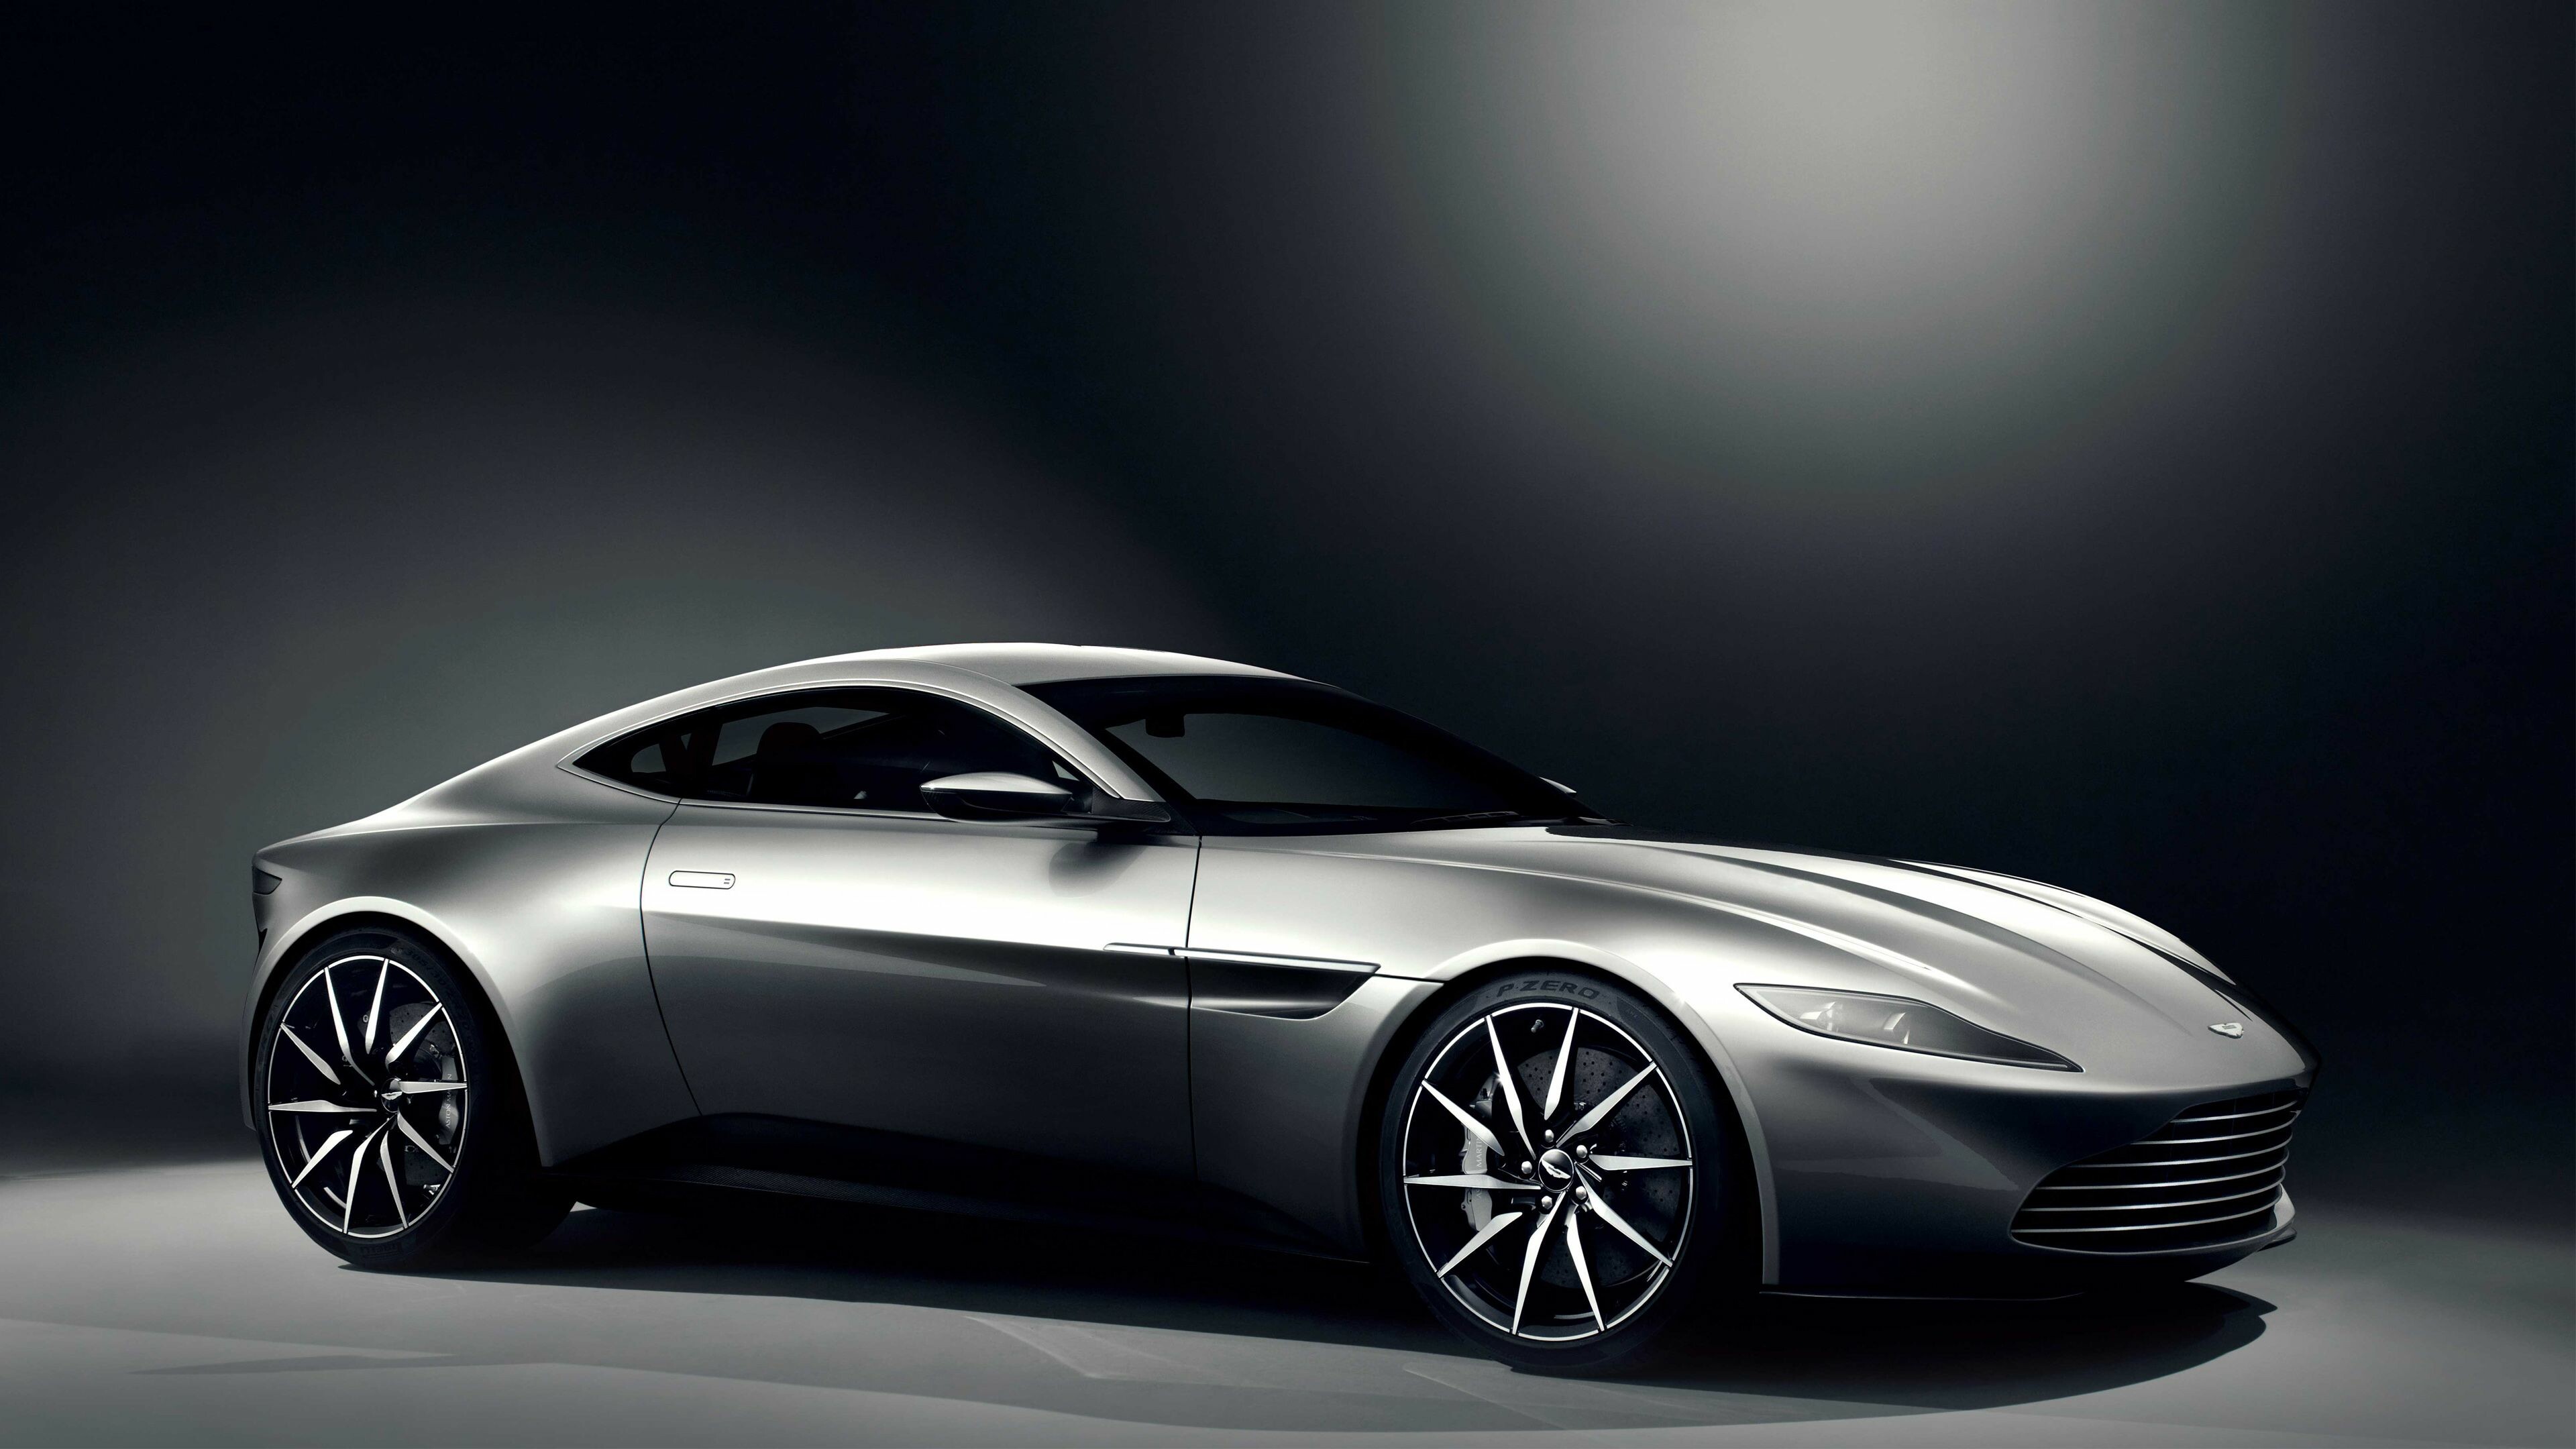 Aston Martin: DB10, A bespoke grand tourer specially developed for the James Bond film Spectre. 3840x2160 4K Background.